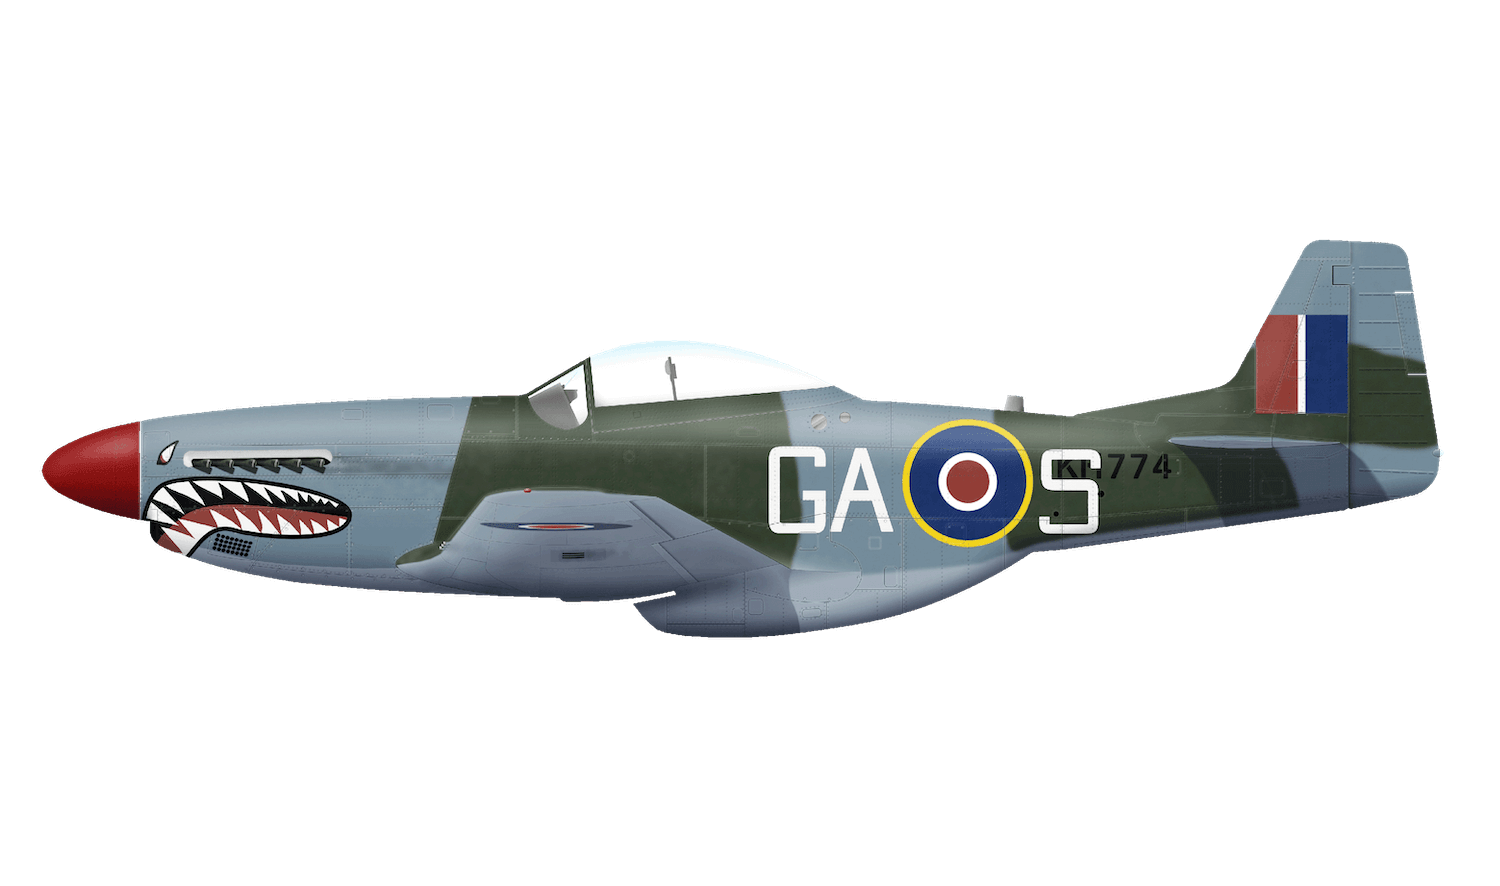 Mustang-51 Fighter Jet